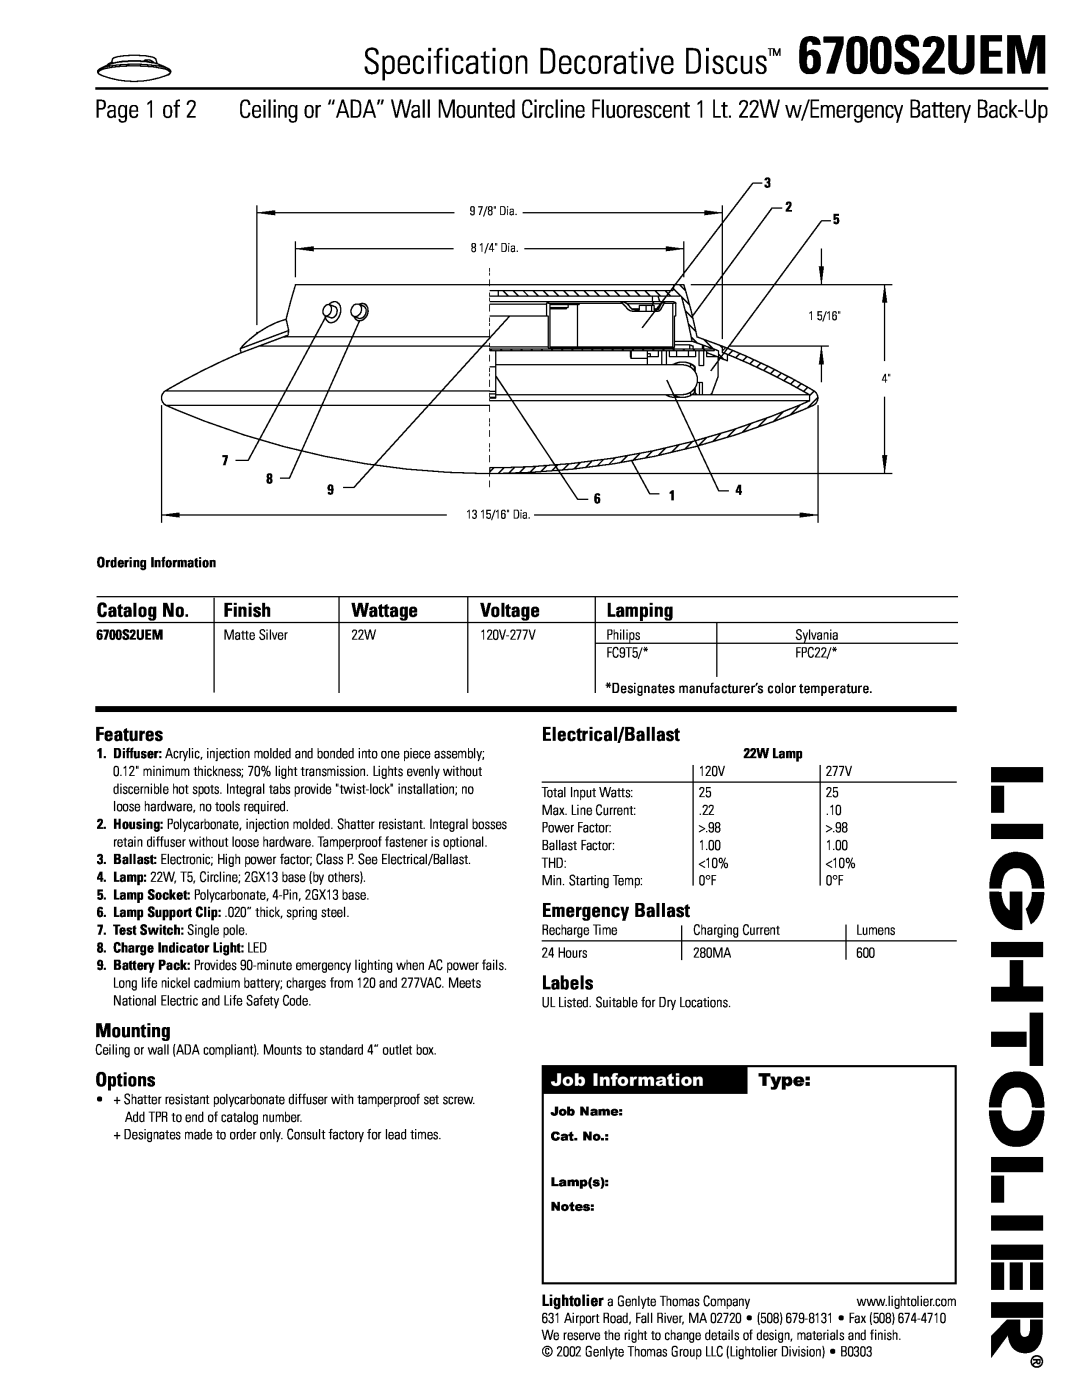 Lightolier manual Specification Decorative Discus 6700S2UEM 